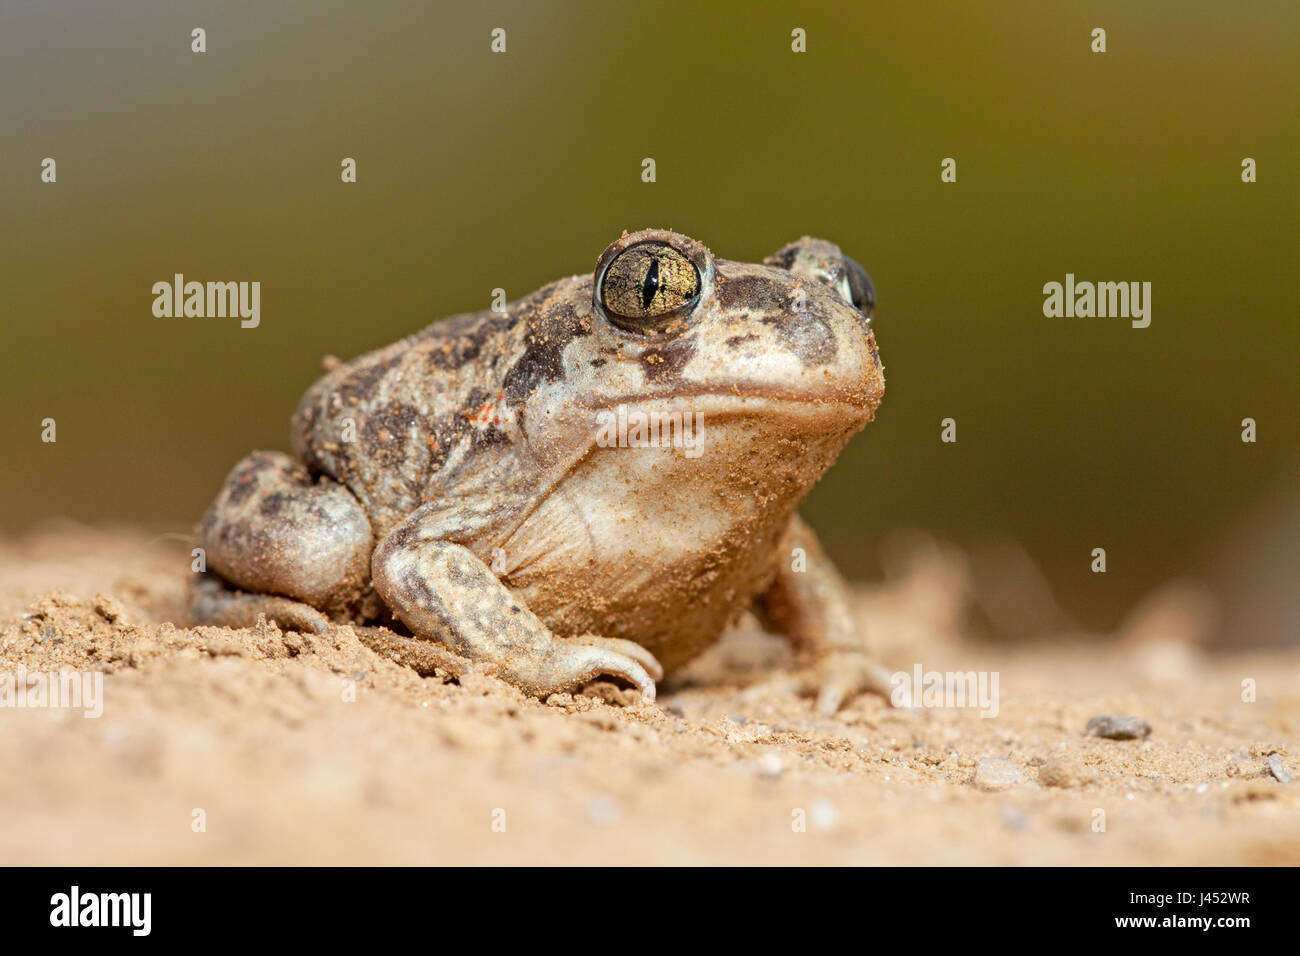 Foto van een juveniele Syrische knofloopad op zand met een tegen een zachte groene achtergrond; photo of a juvenile Eastern spadefoot toad on sand against a soft green background; Stock Photo